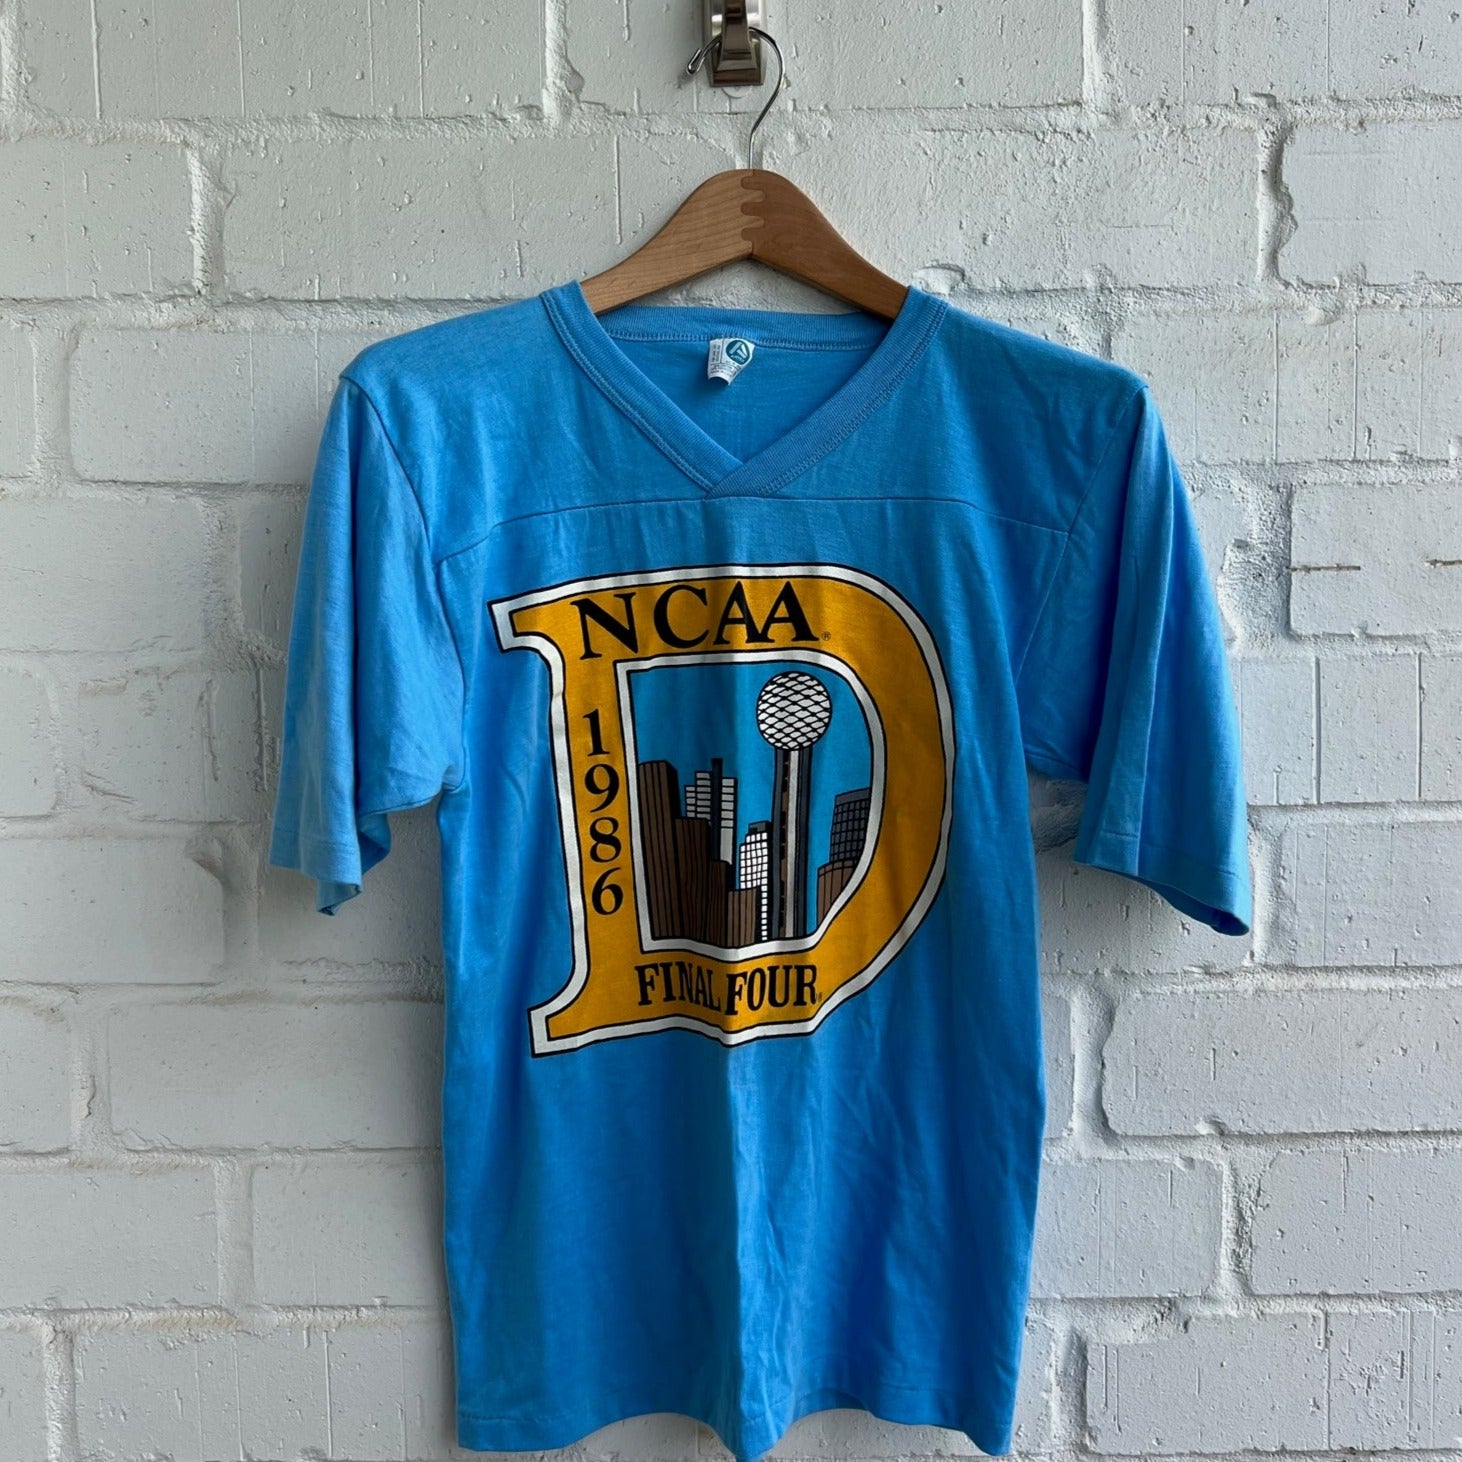 1986 NCAA Final Four Vintage T-Shirt